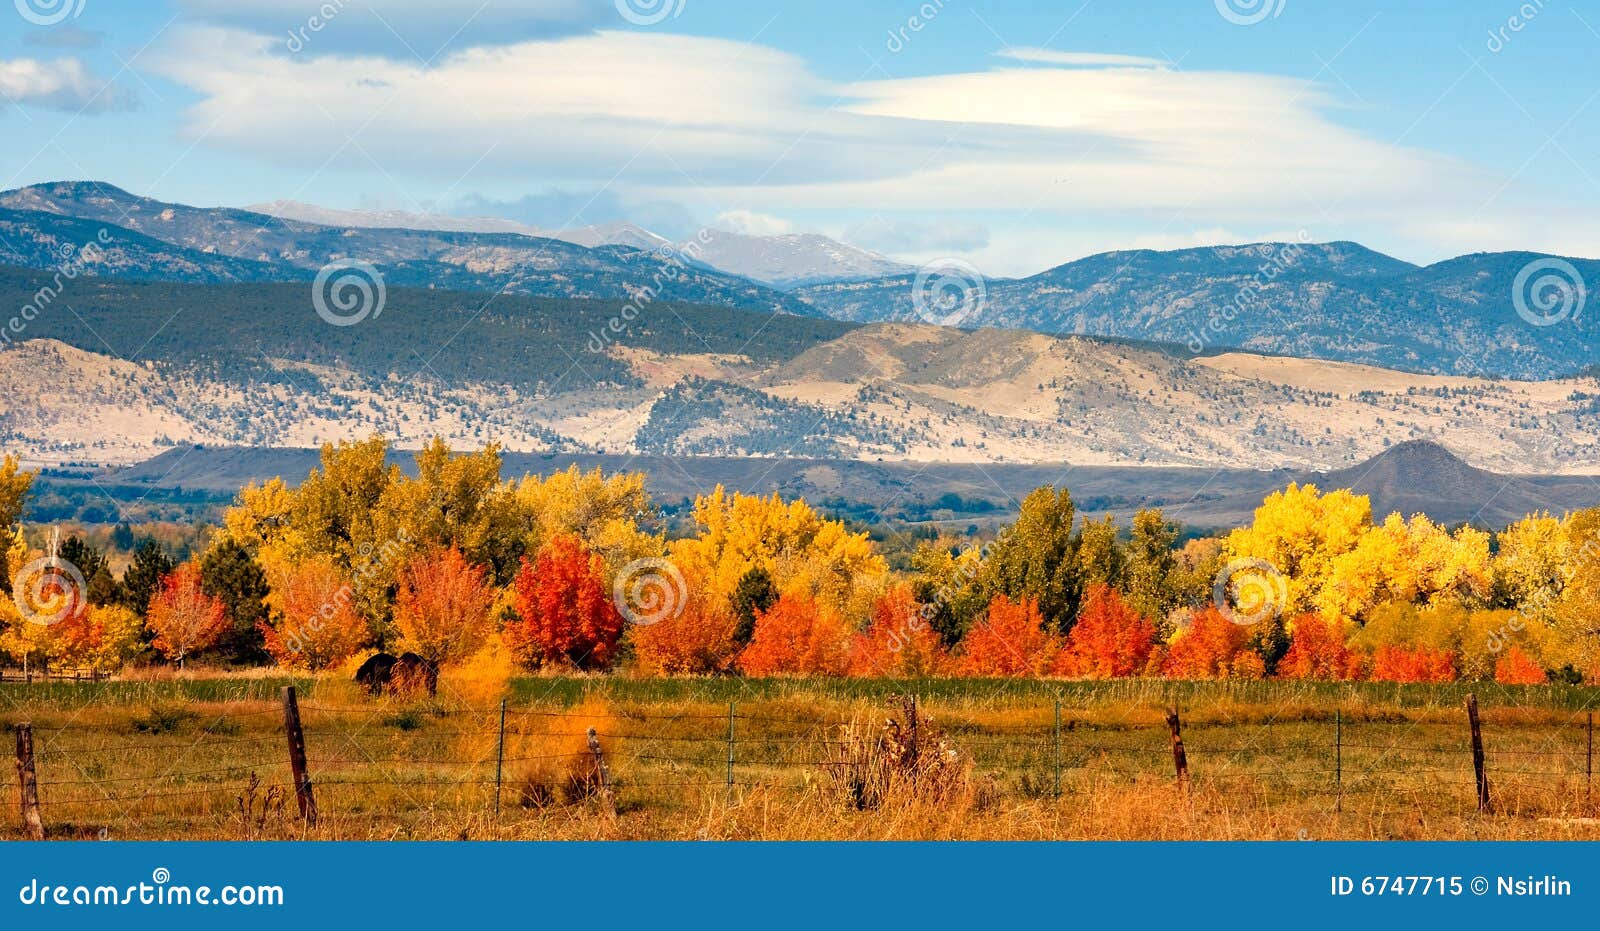 autumn colorado front range